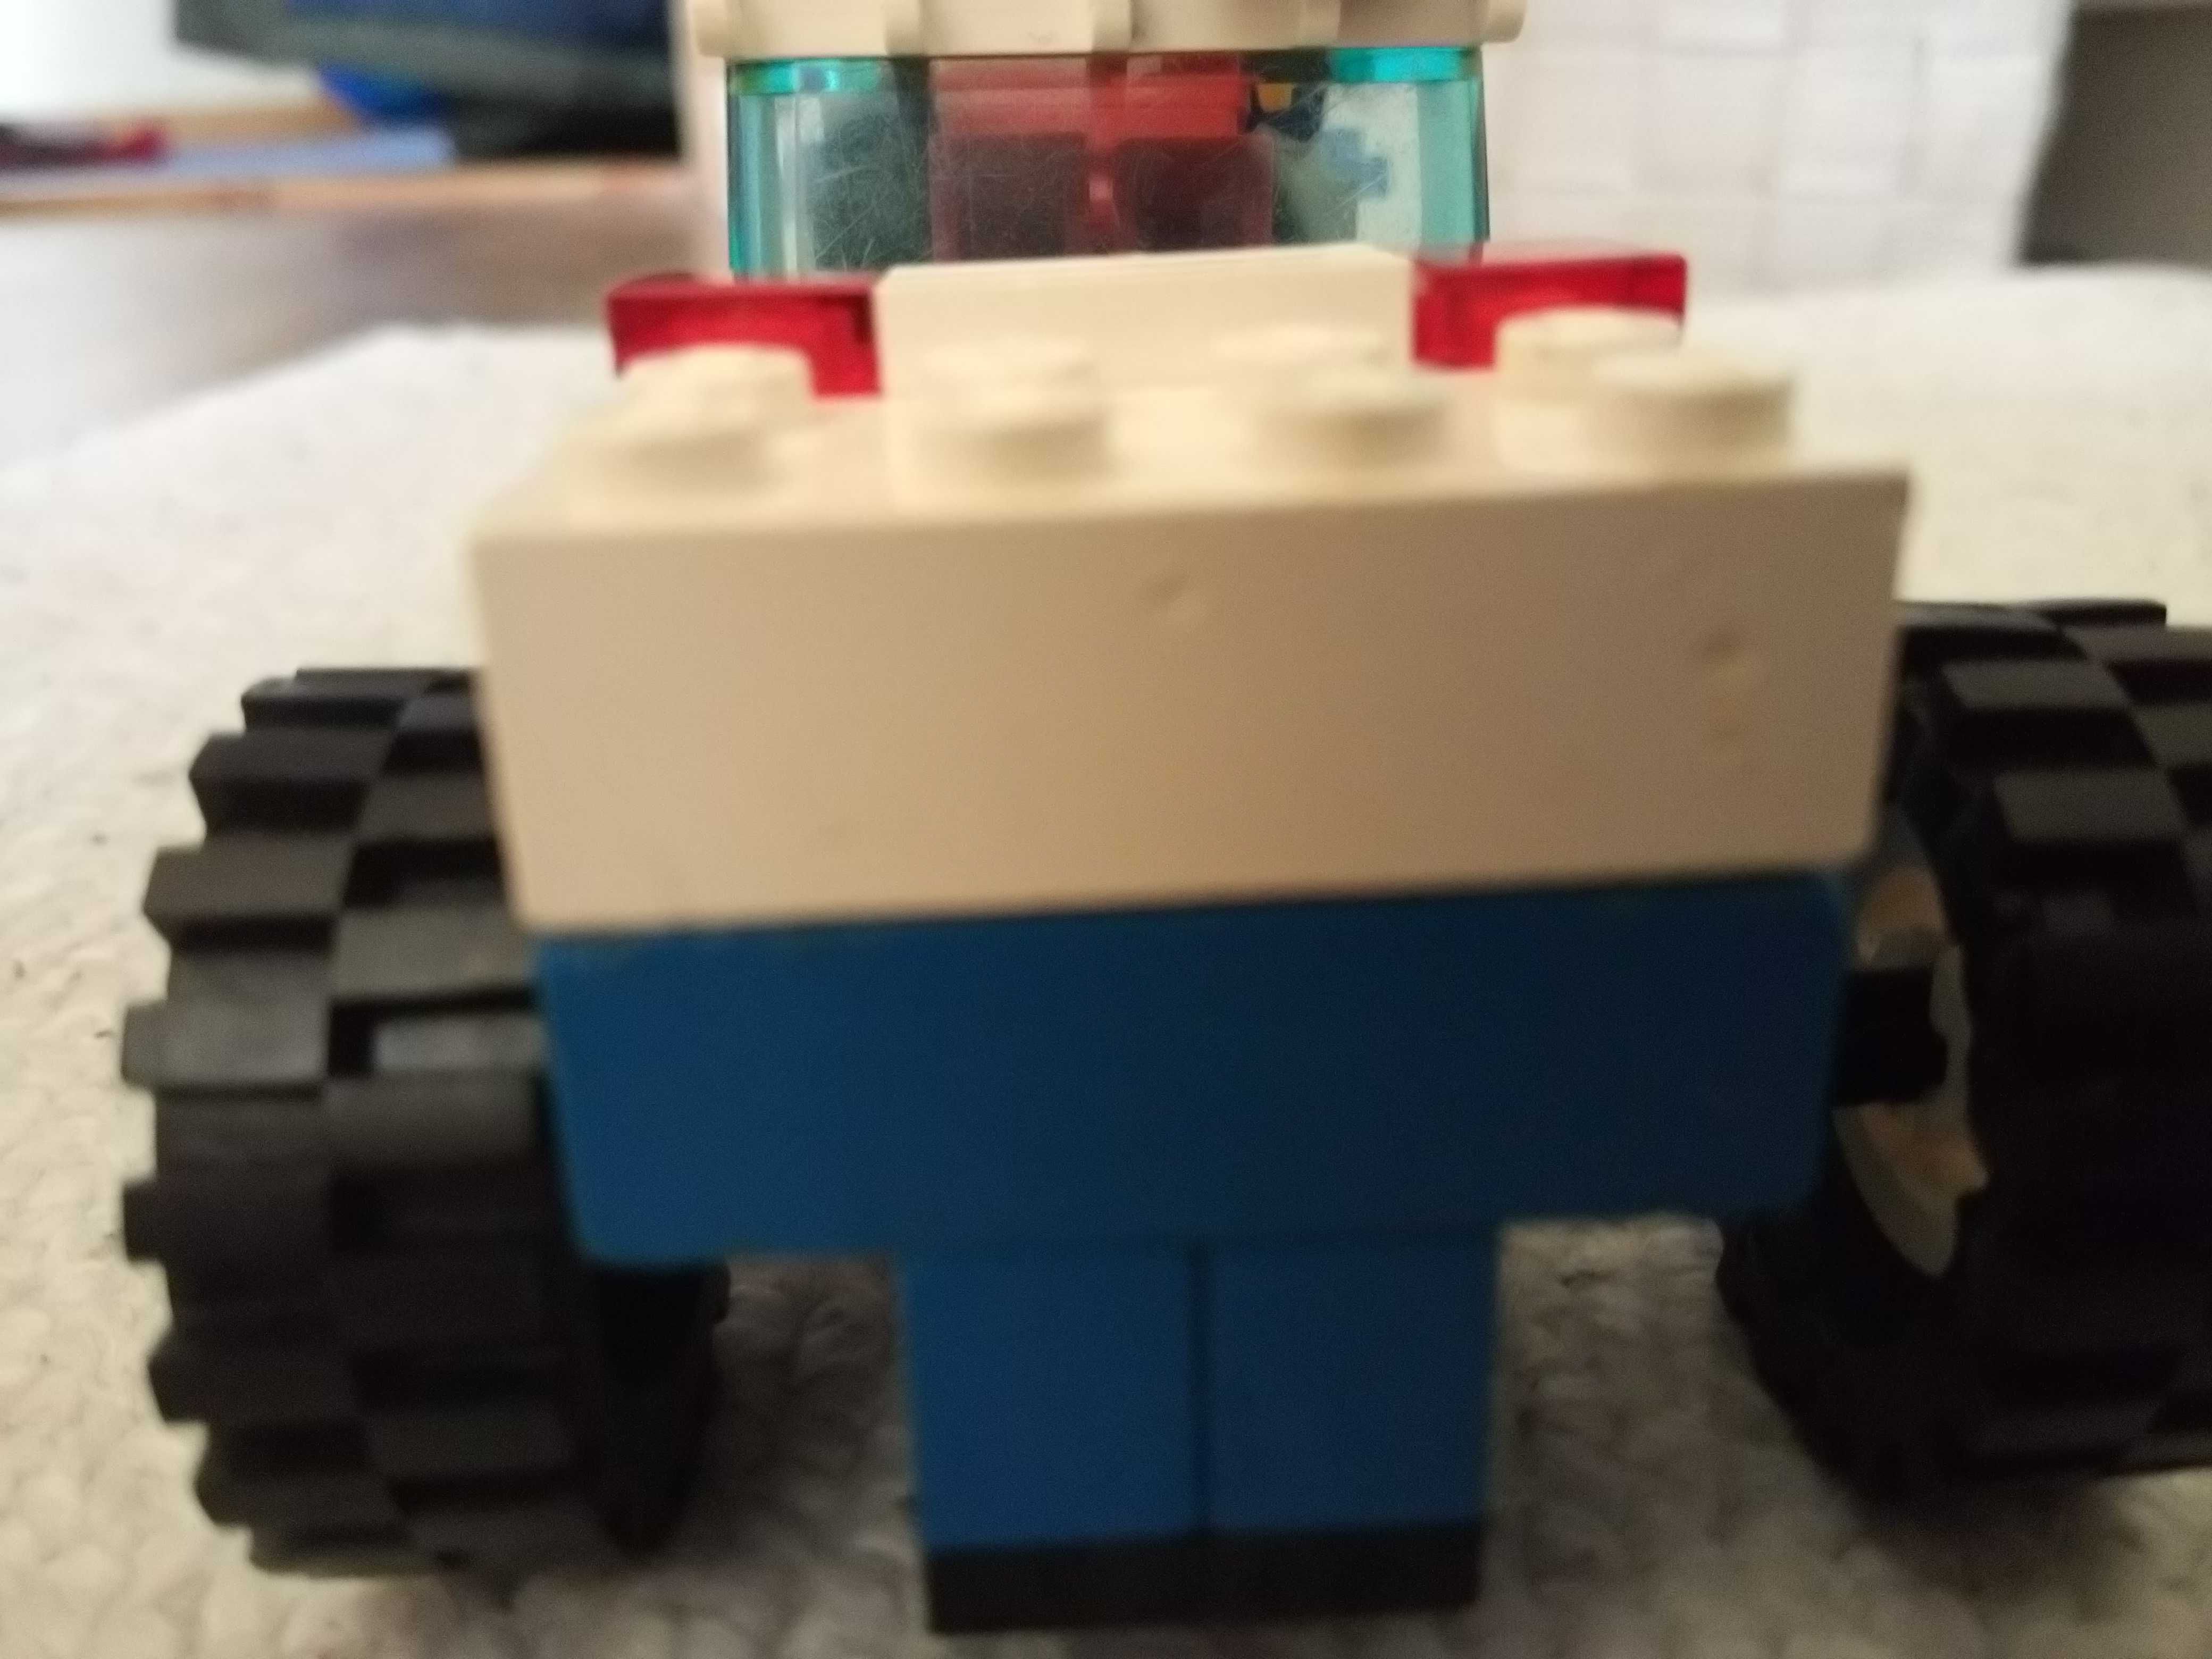 Lego samochód własny projekt